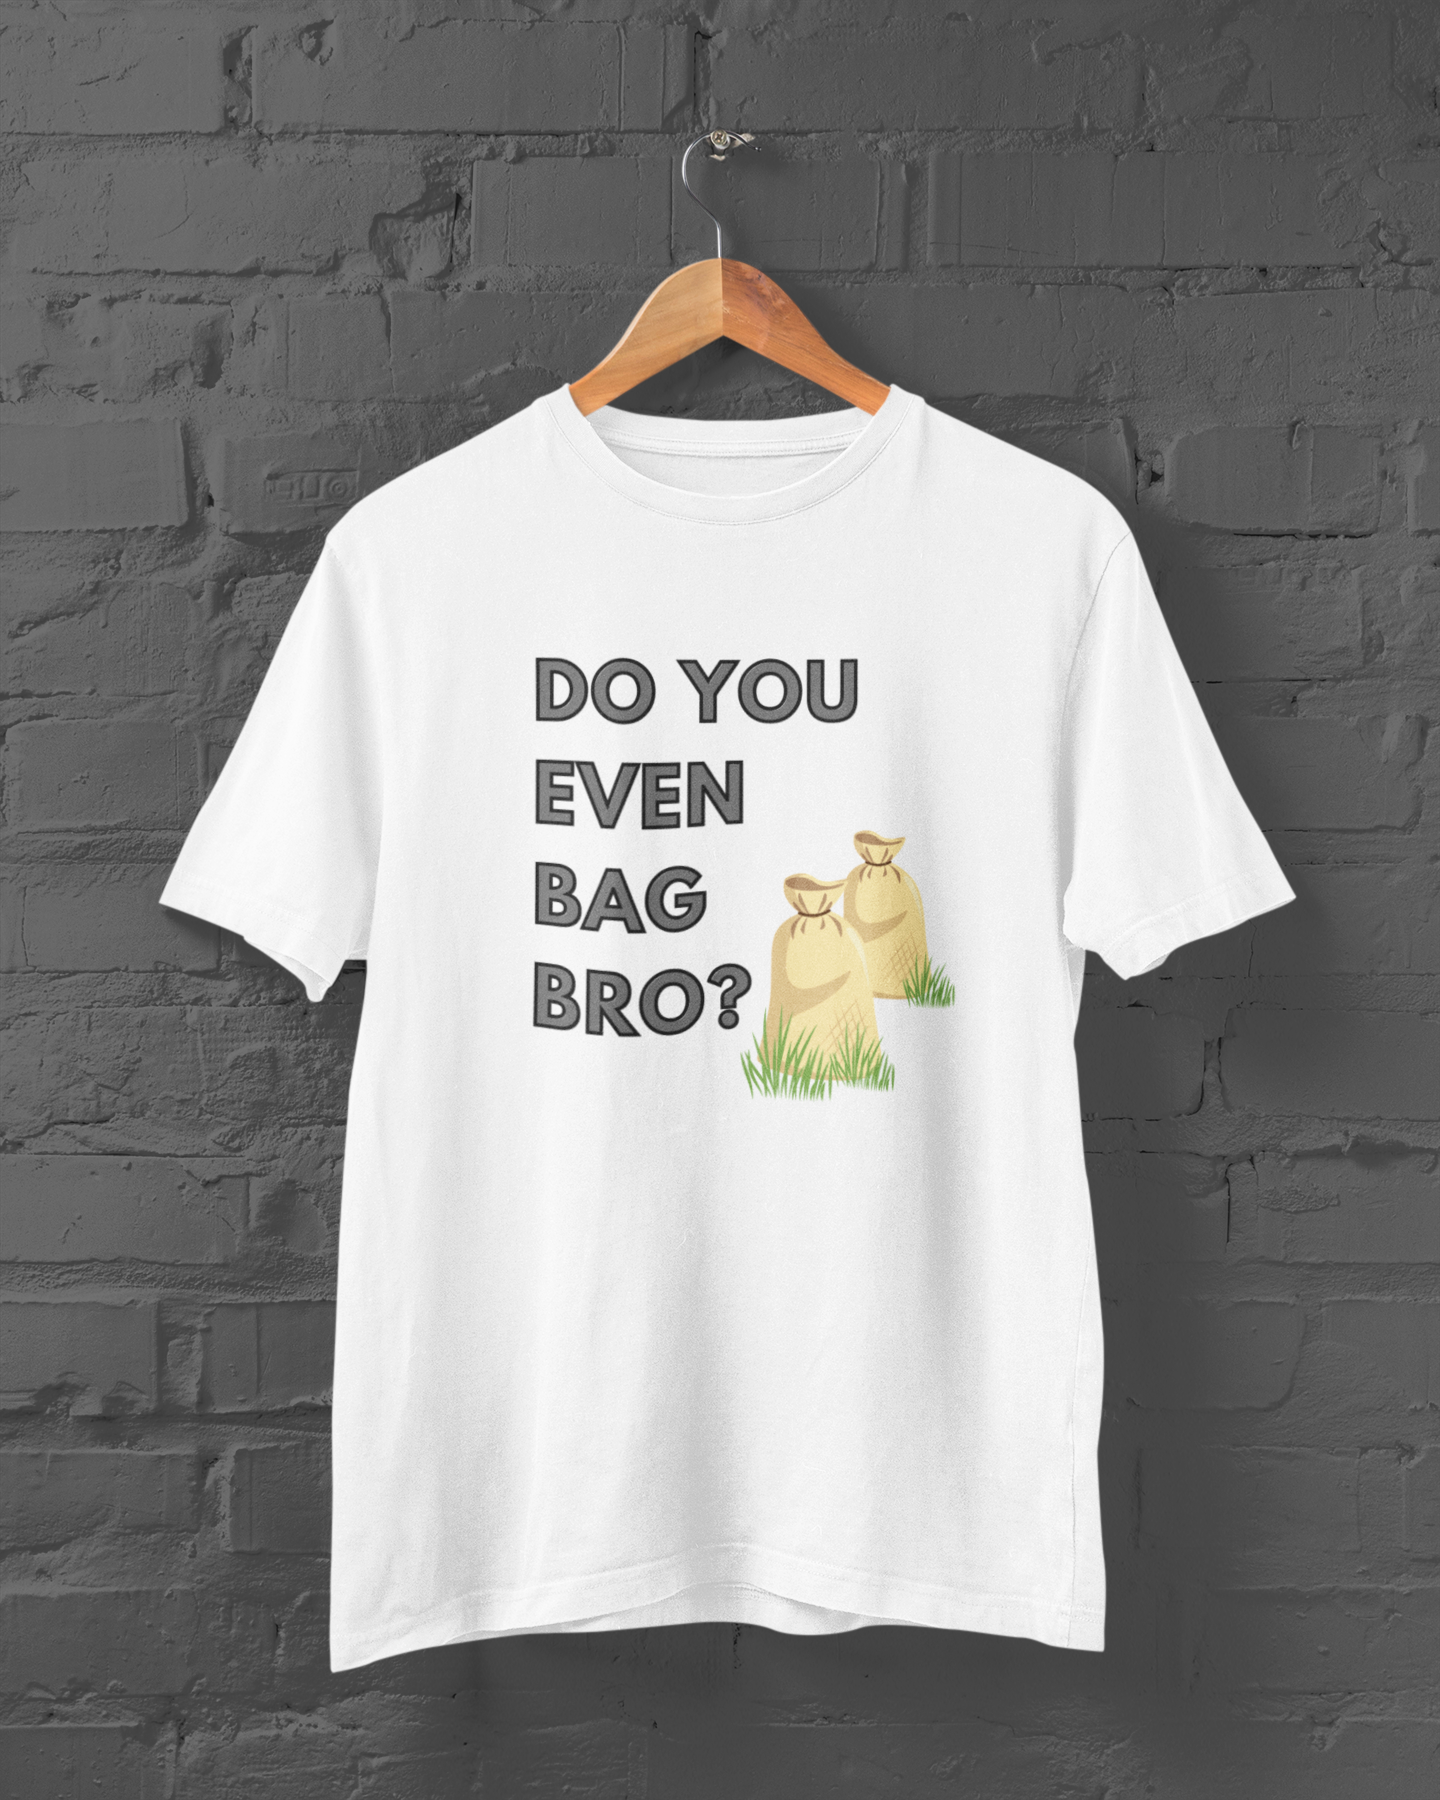 Do You Even Bag Bro Short-Sleeve Unisex T-Shirt